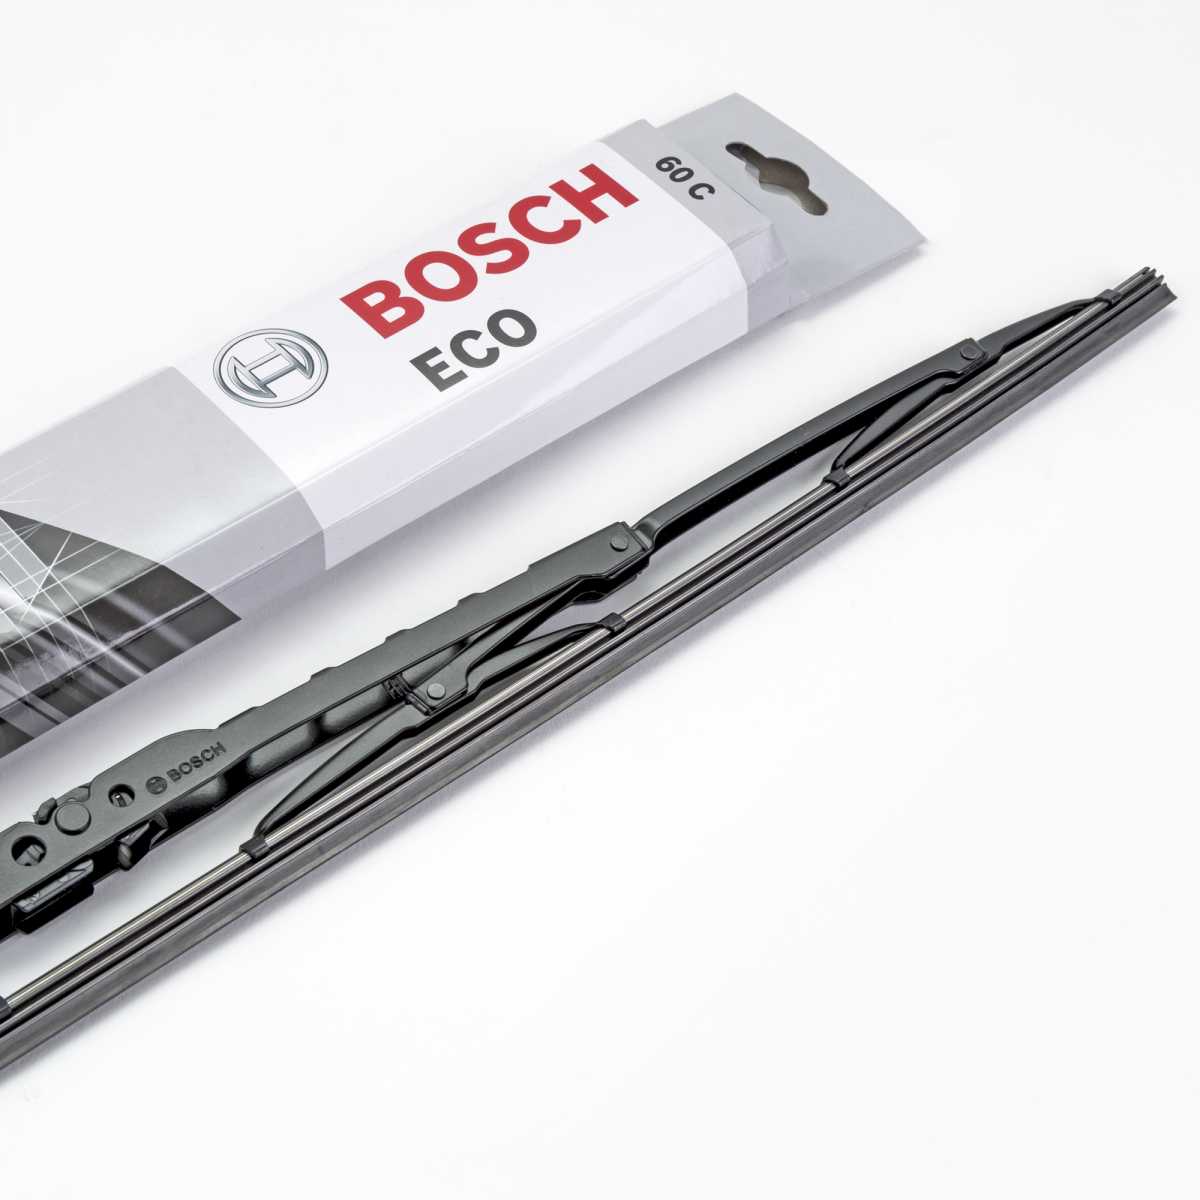 Bosch Eco